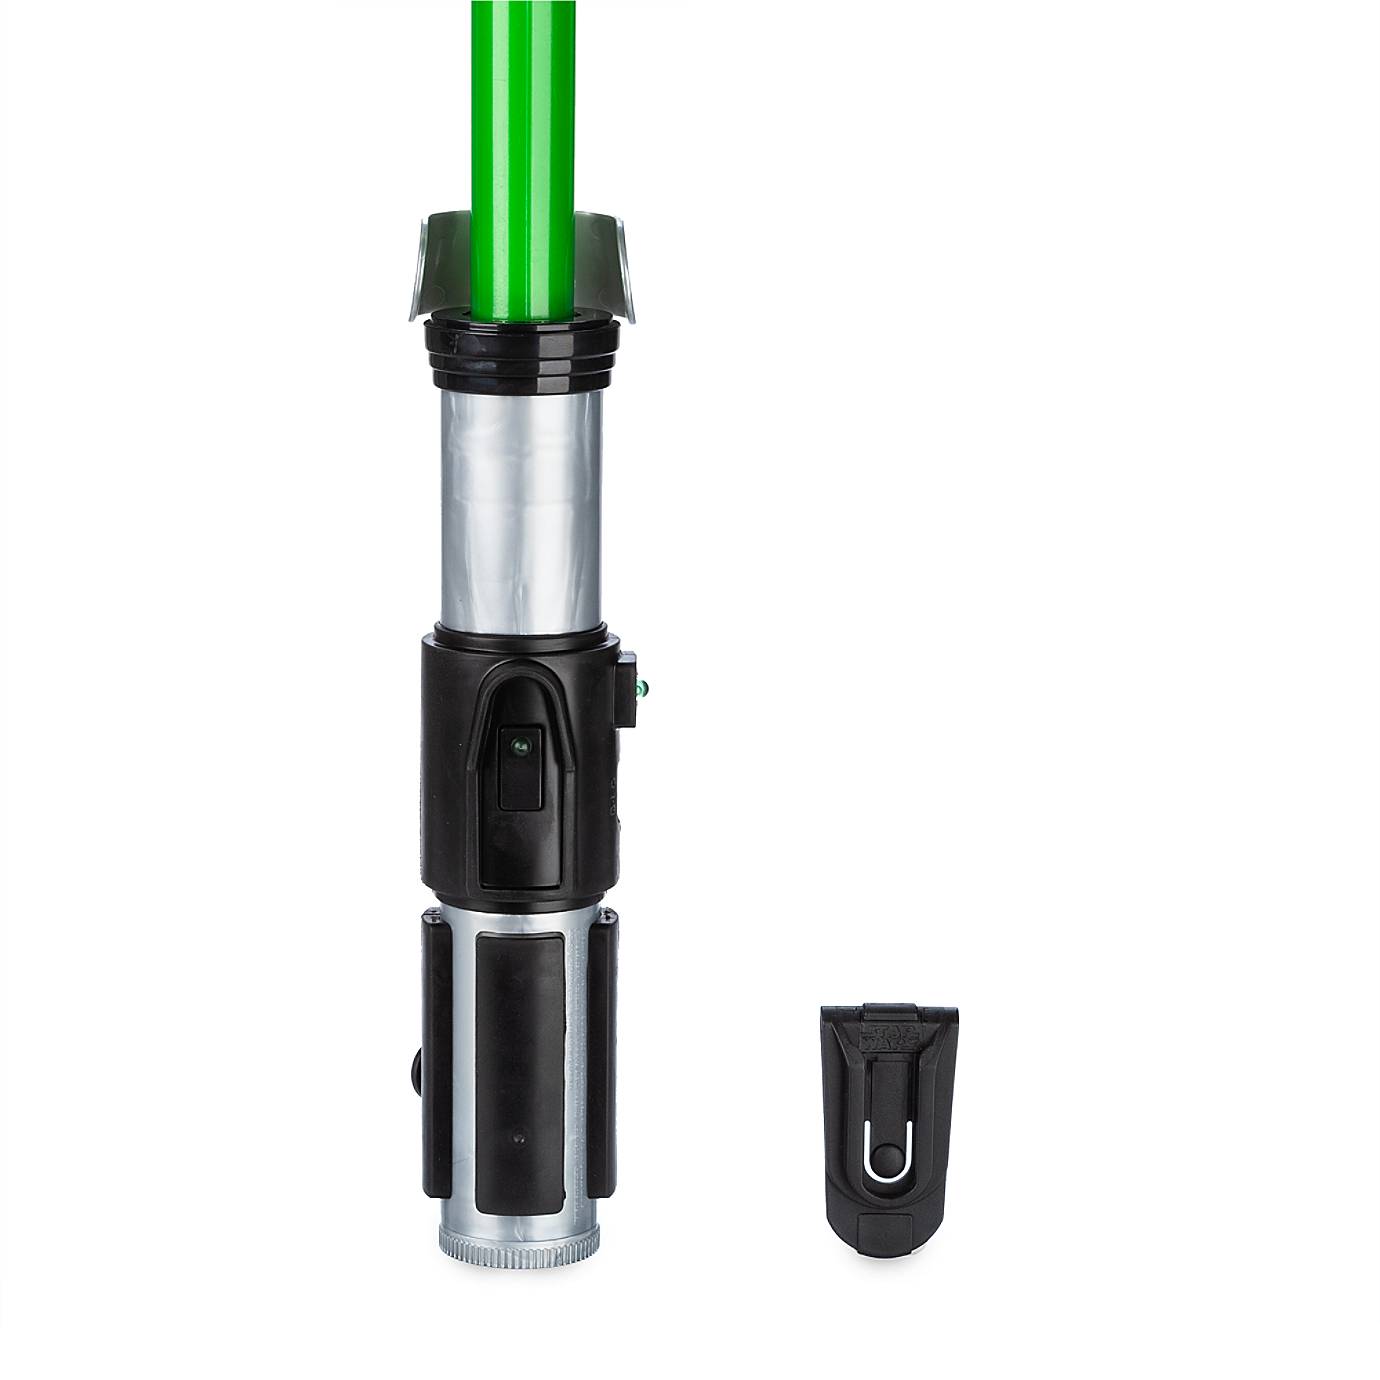 Disney Store Yoda Lightsaber Star Wars New with Box